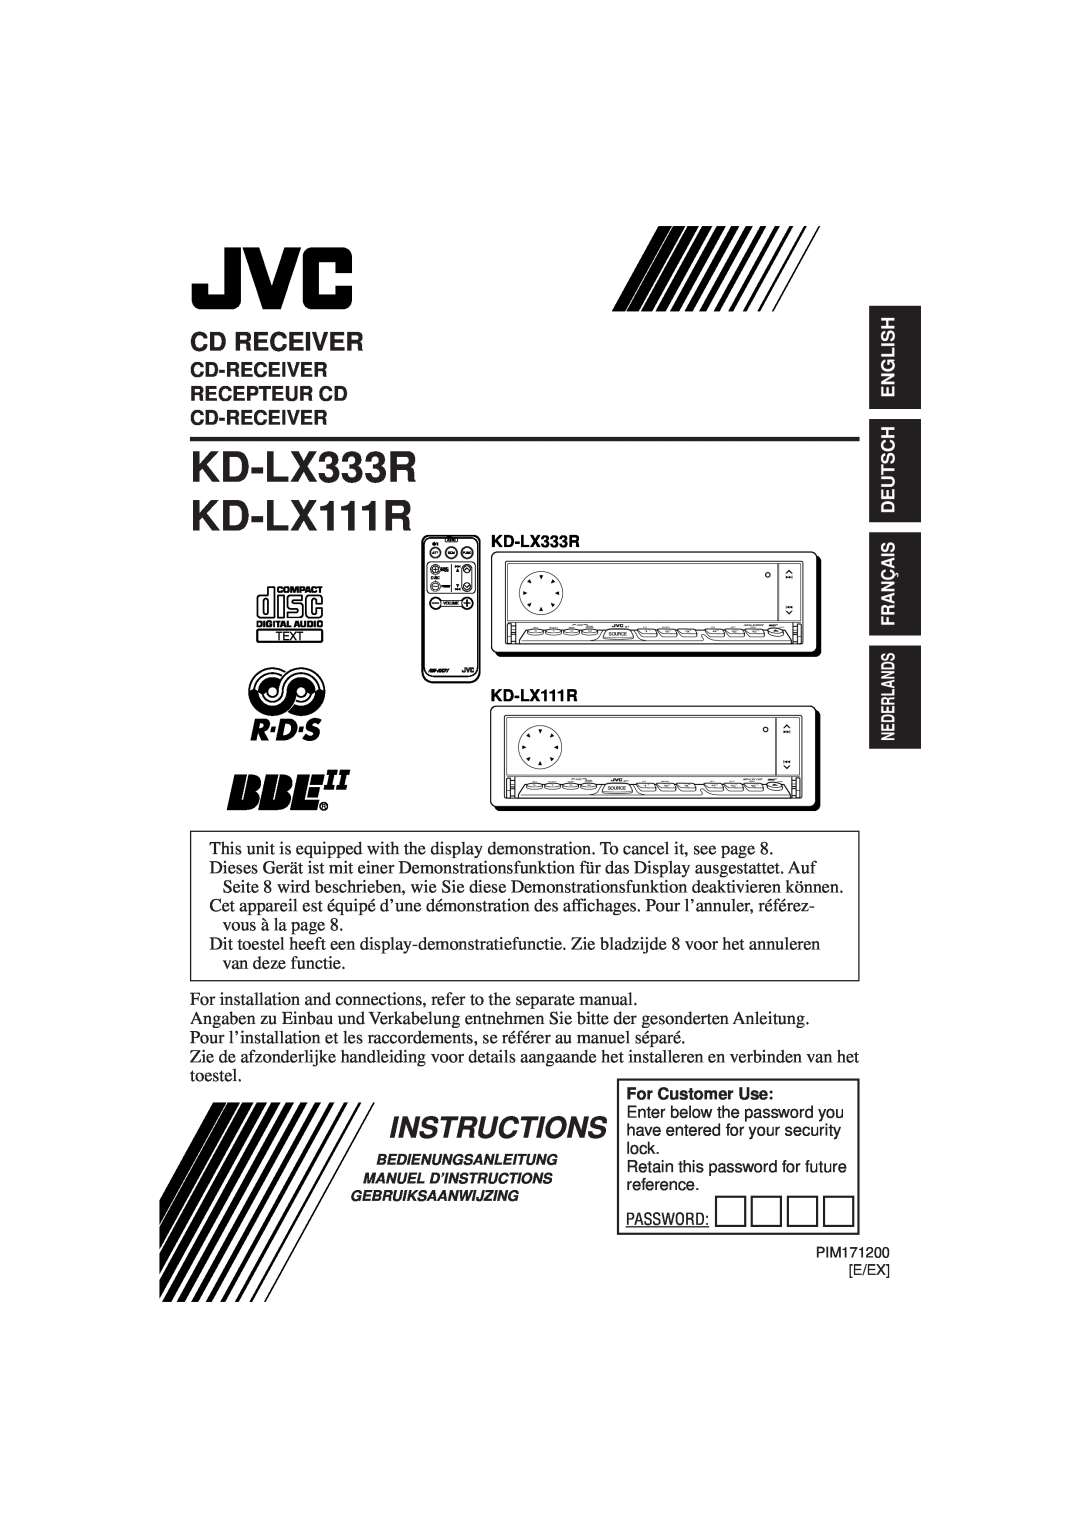 JVC PIM171200 manual Cd Receiver, Cd-Receiver Recepteur Cd Cd-Receiver, KD-LX333R KD-LX111R, Instructions 